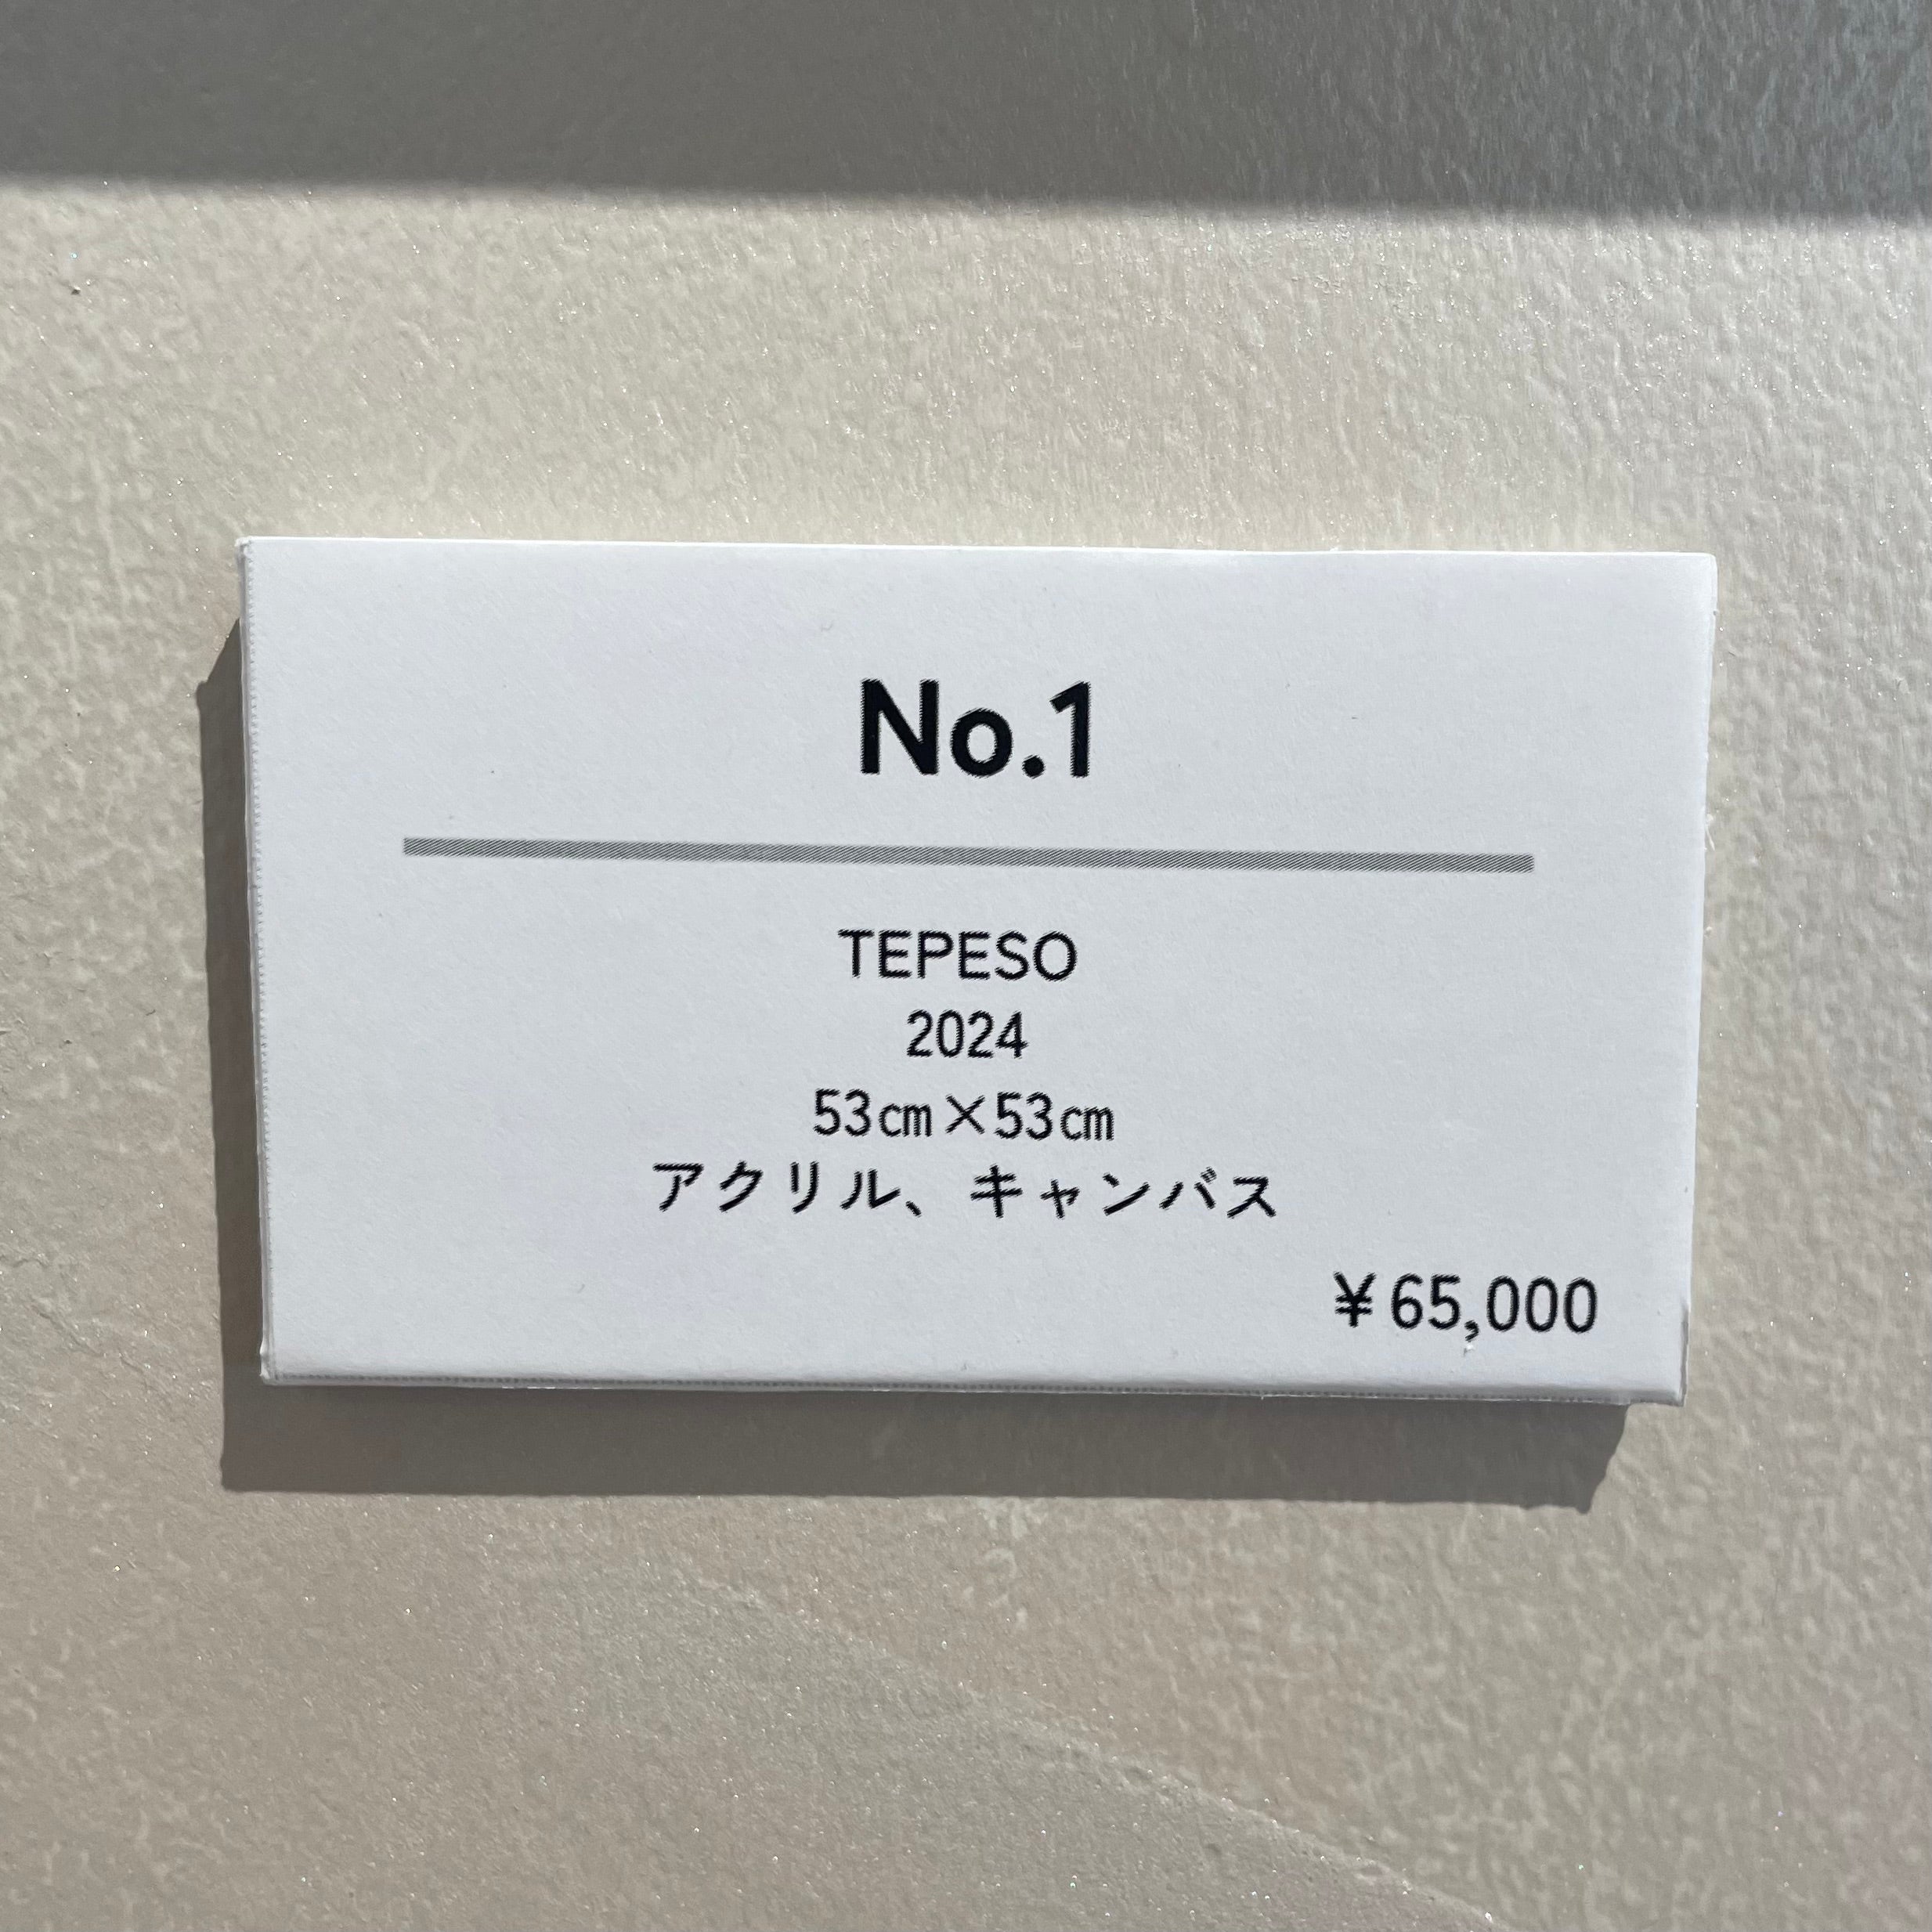 TEPESO 2024 NO.1